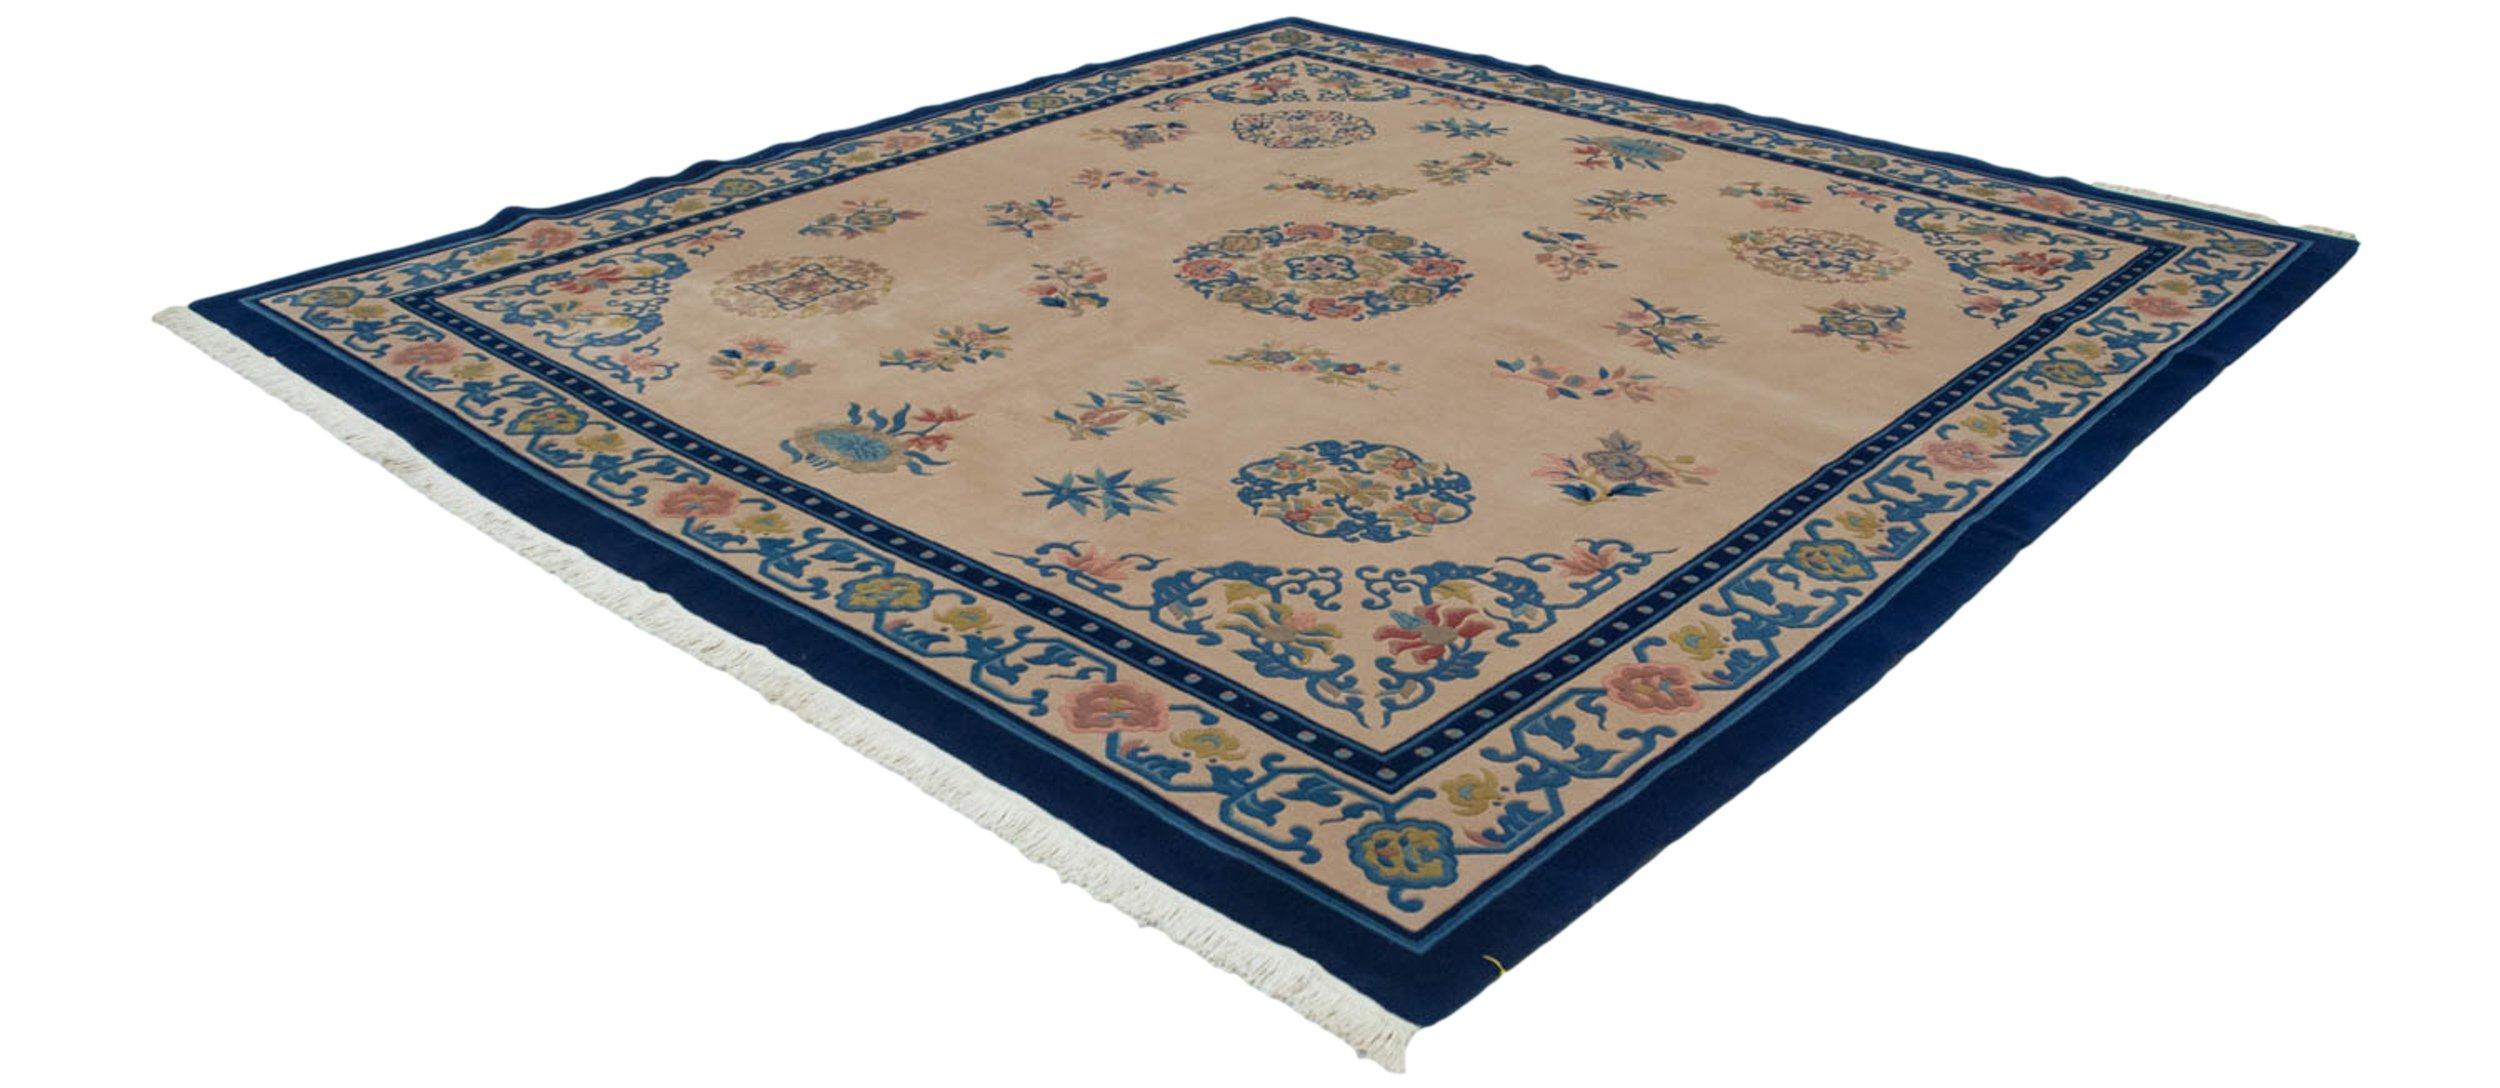 Vintage Japanese Peking Design Square Carpet For Sale 2